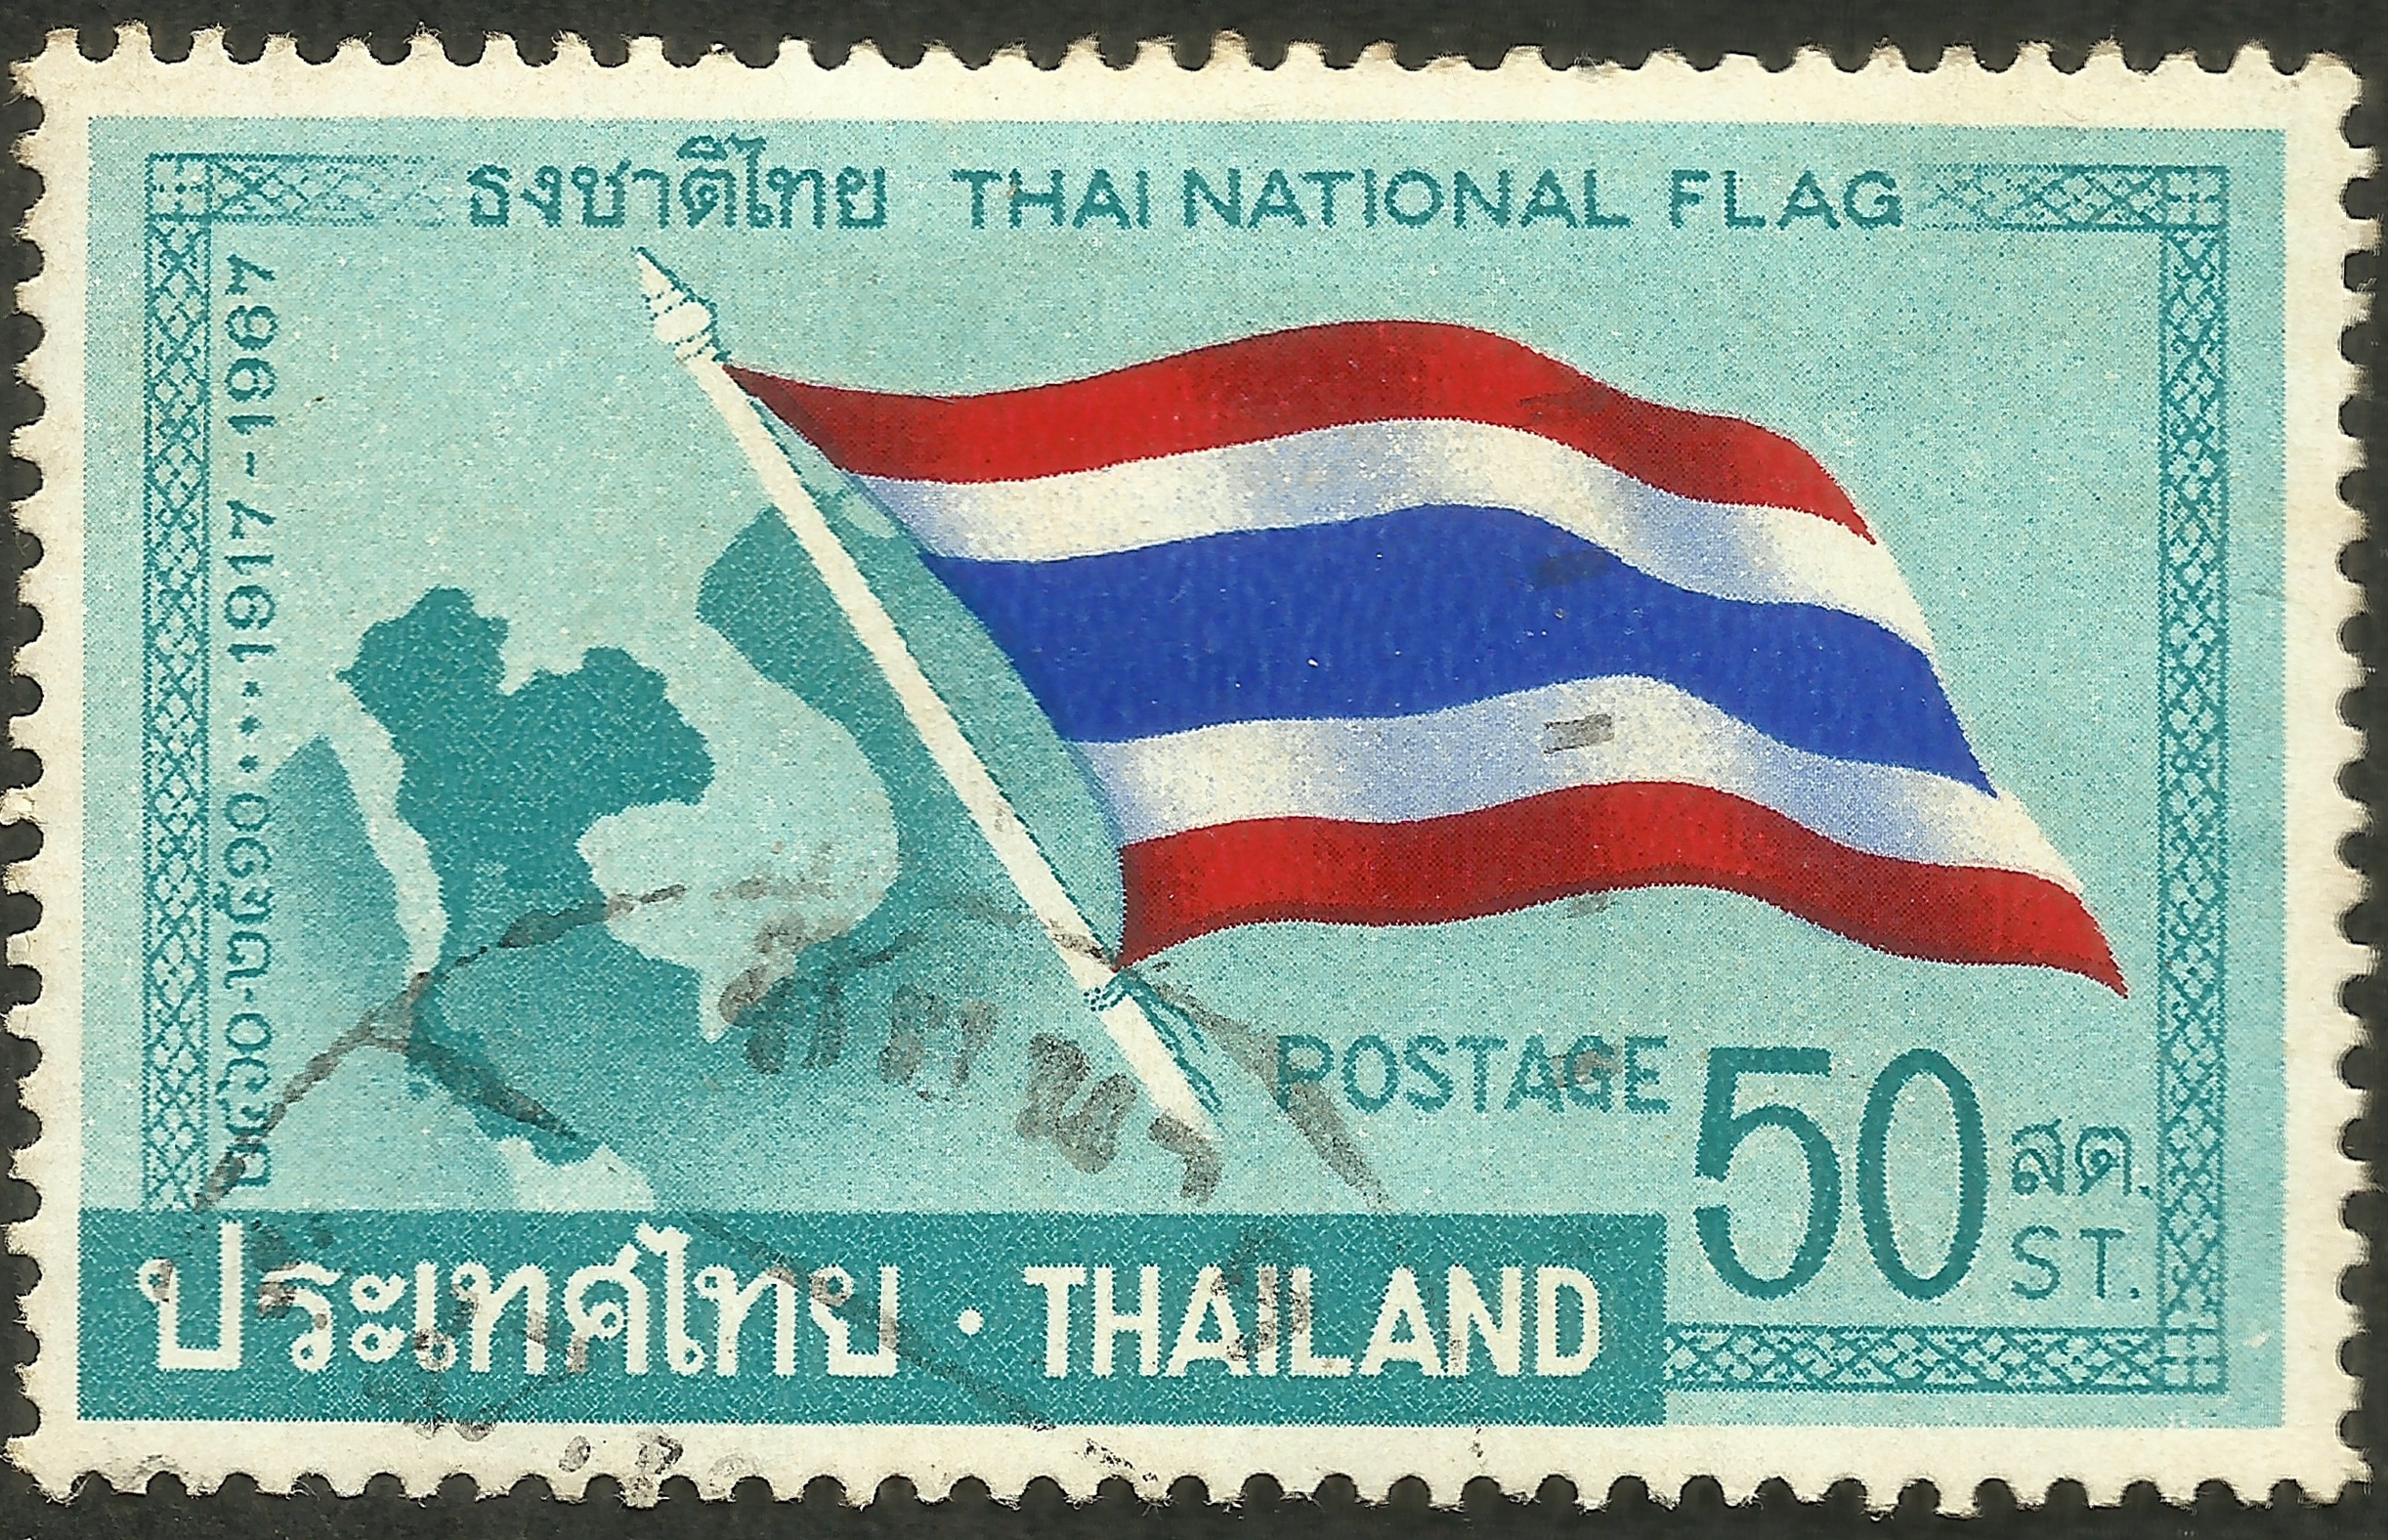 Thailand #495, released December 5, 1967